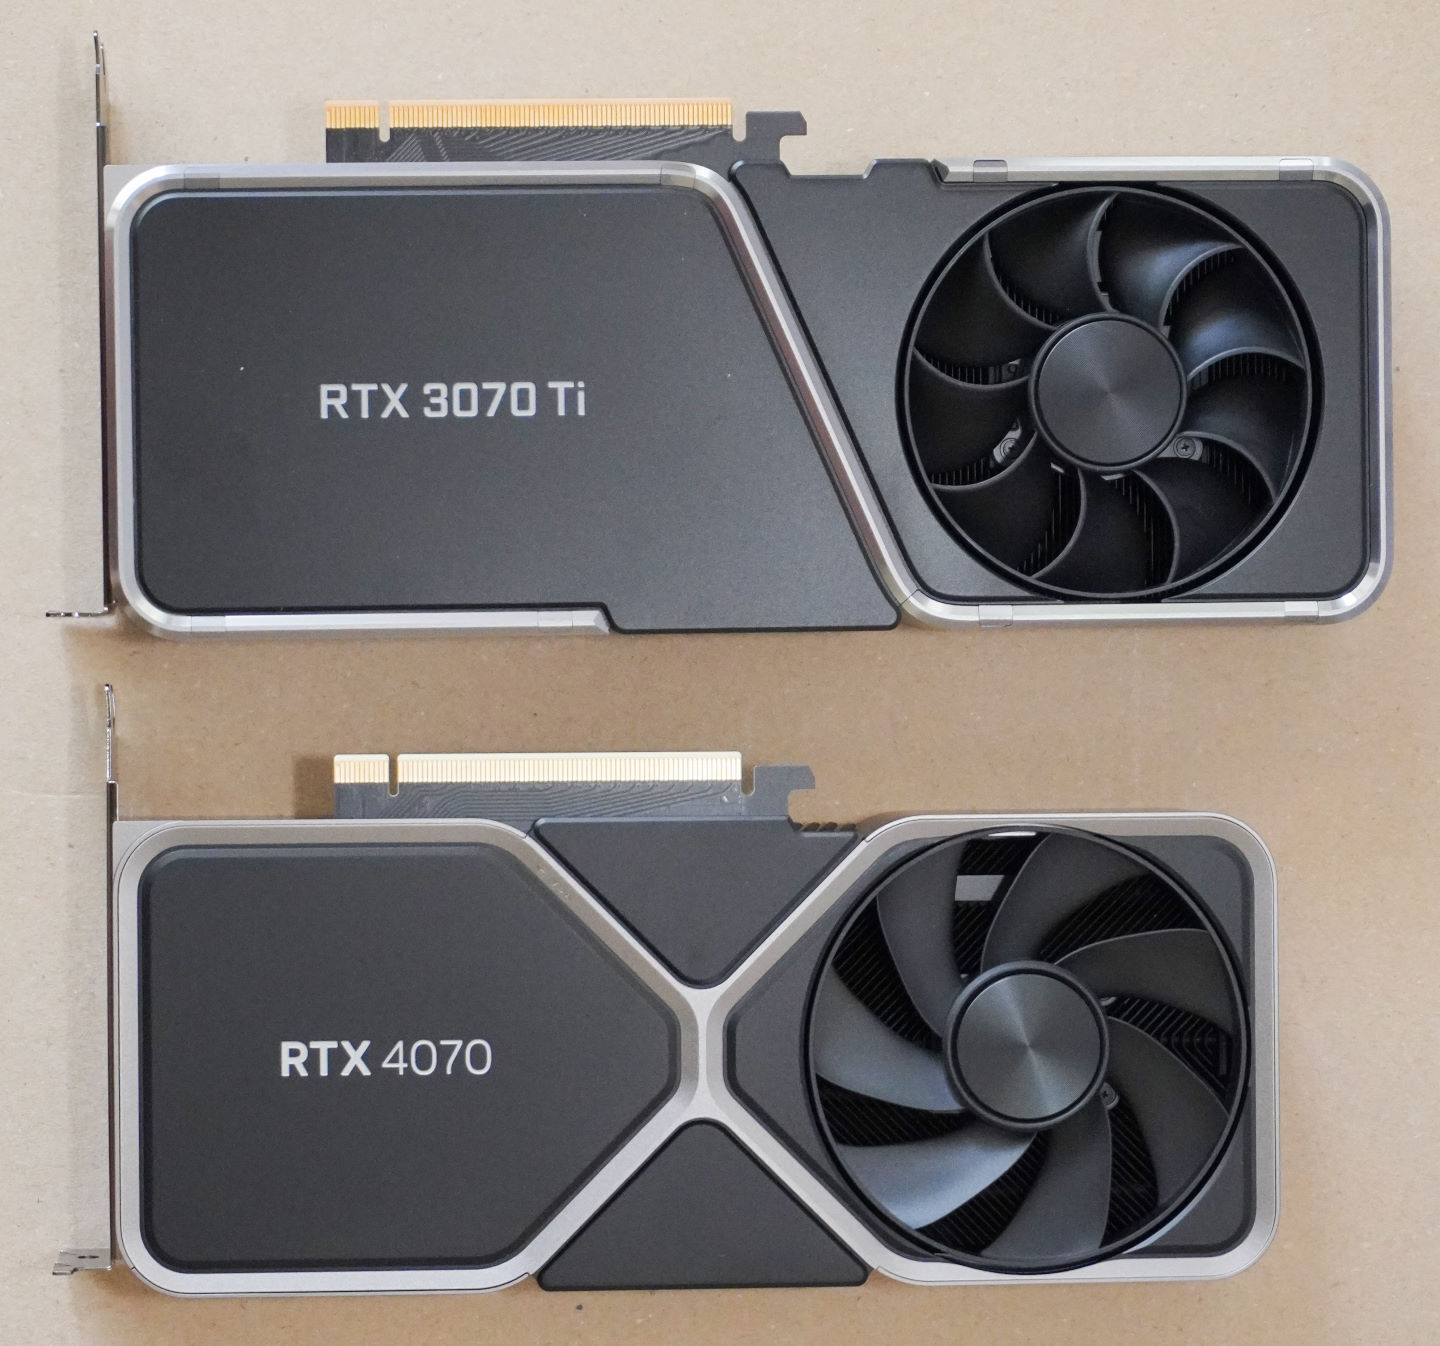 GeForce RTX 4070 Founder Edition的長度比GeForce RTX 3070 Ti Founder Edition一點，2者都是雙槽的尺寸。